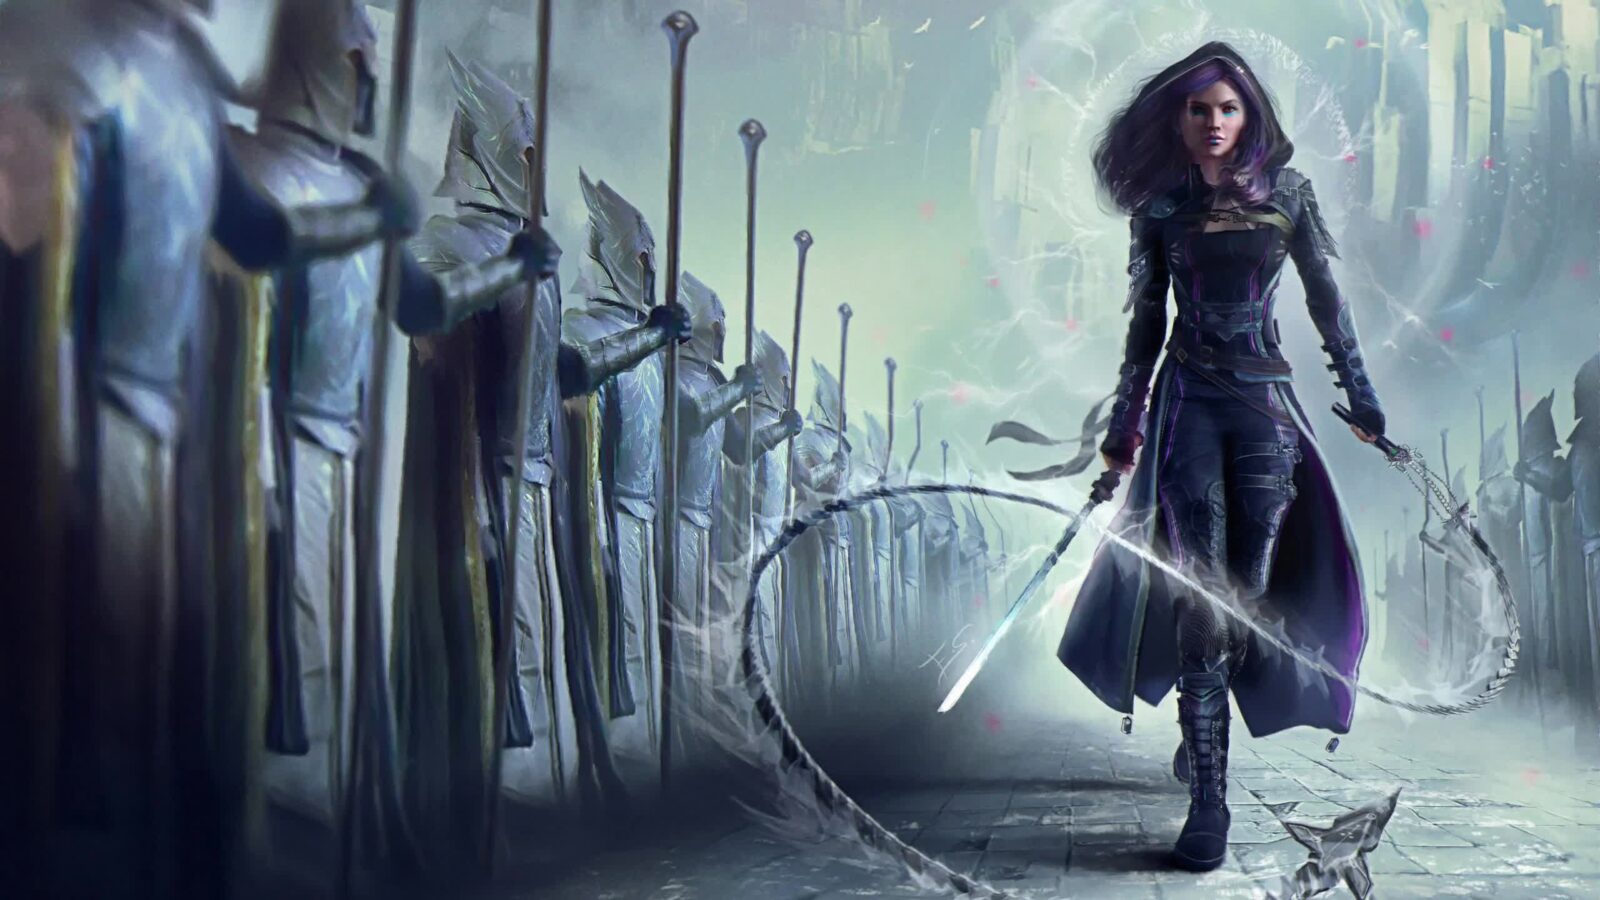 LiveWallpapers4Free.com | Armor Chain-Girl Sword Warrior Woman Magic 2K - Free Live Wallpaper